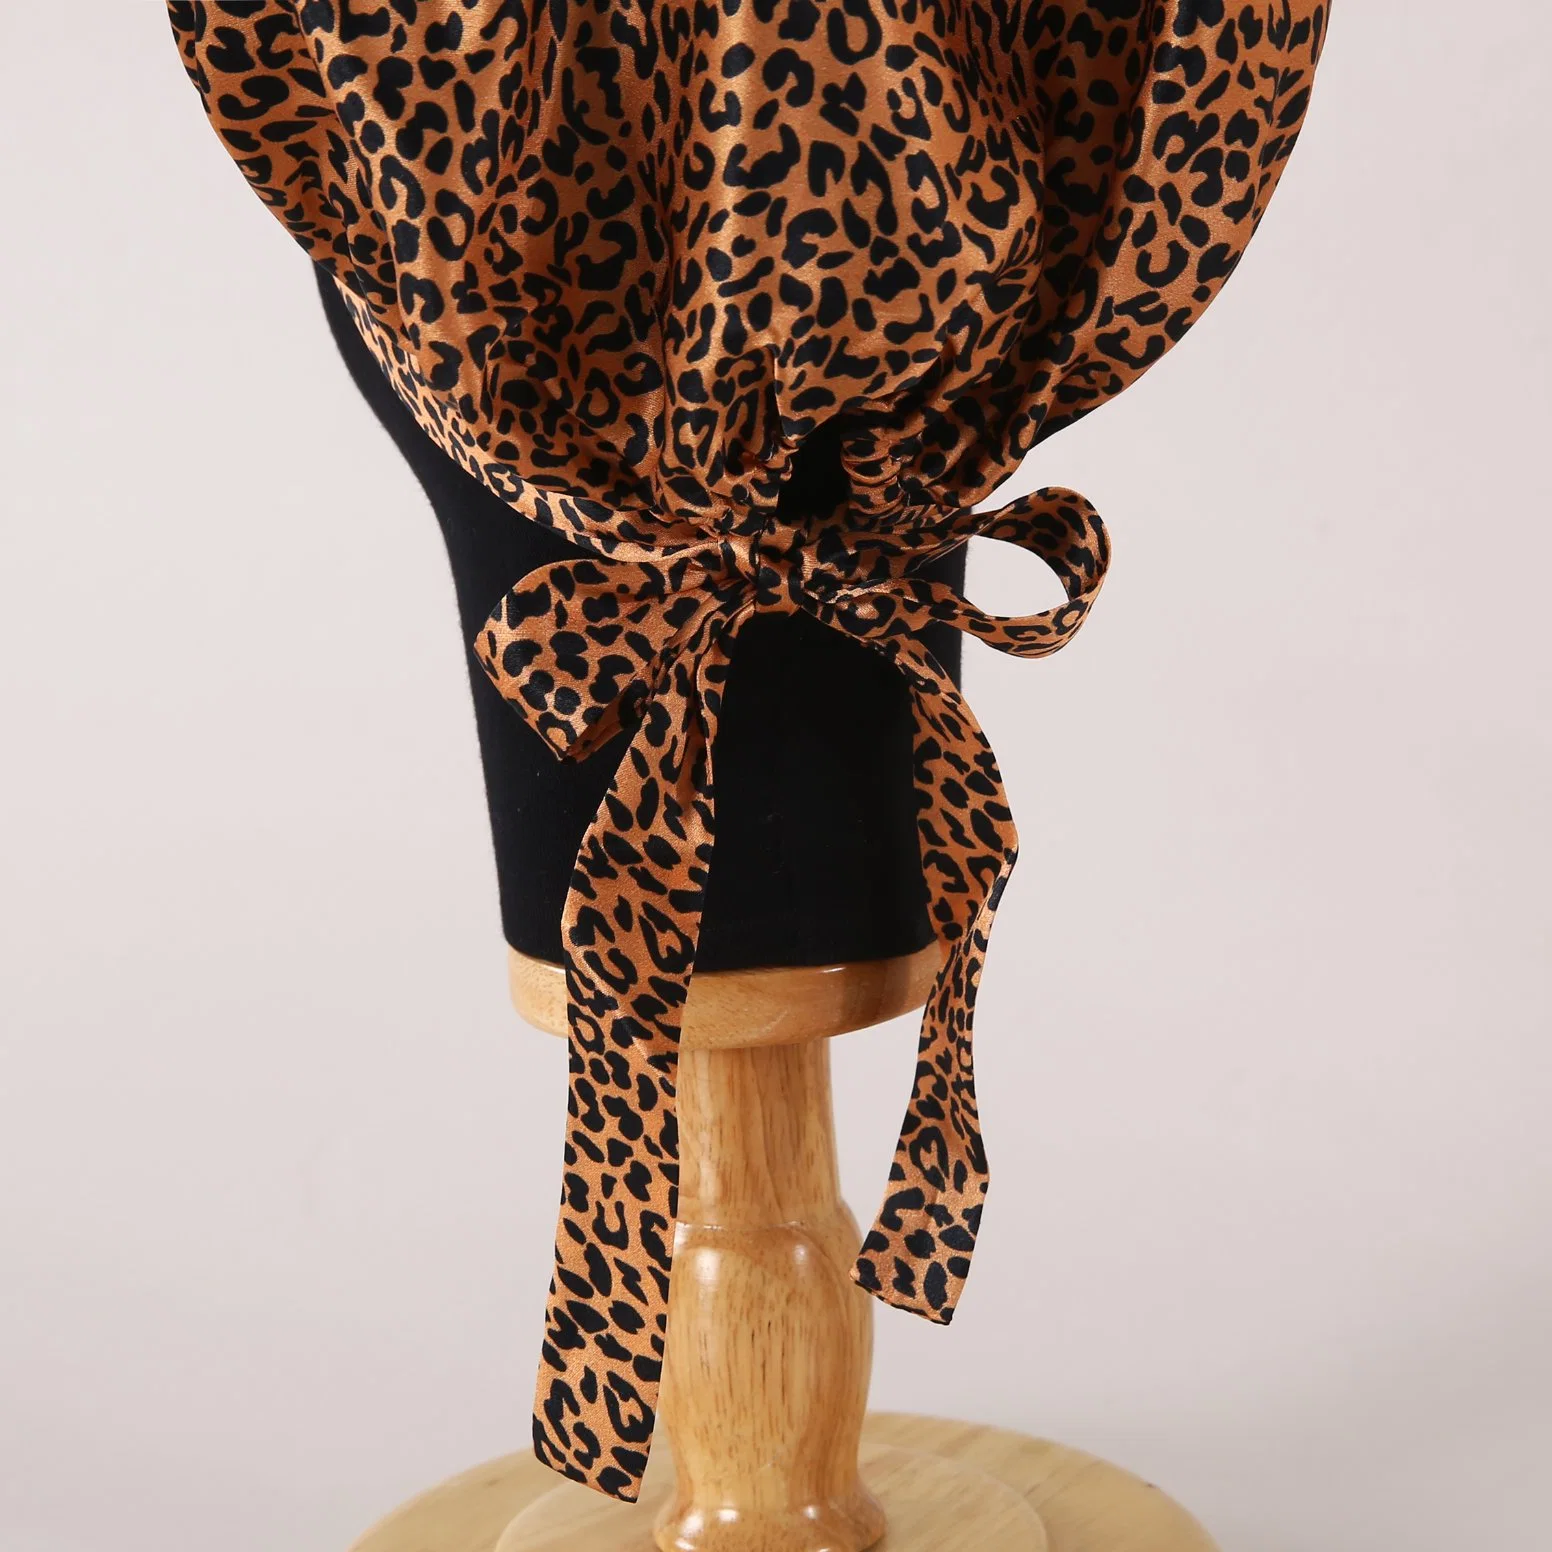 Seda Cabello Bonnet Brown etiqueta personalizada Bonnet de seda